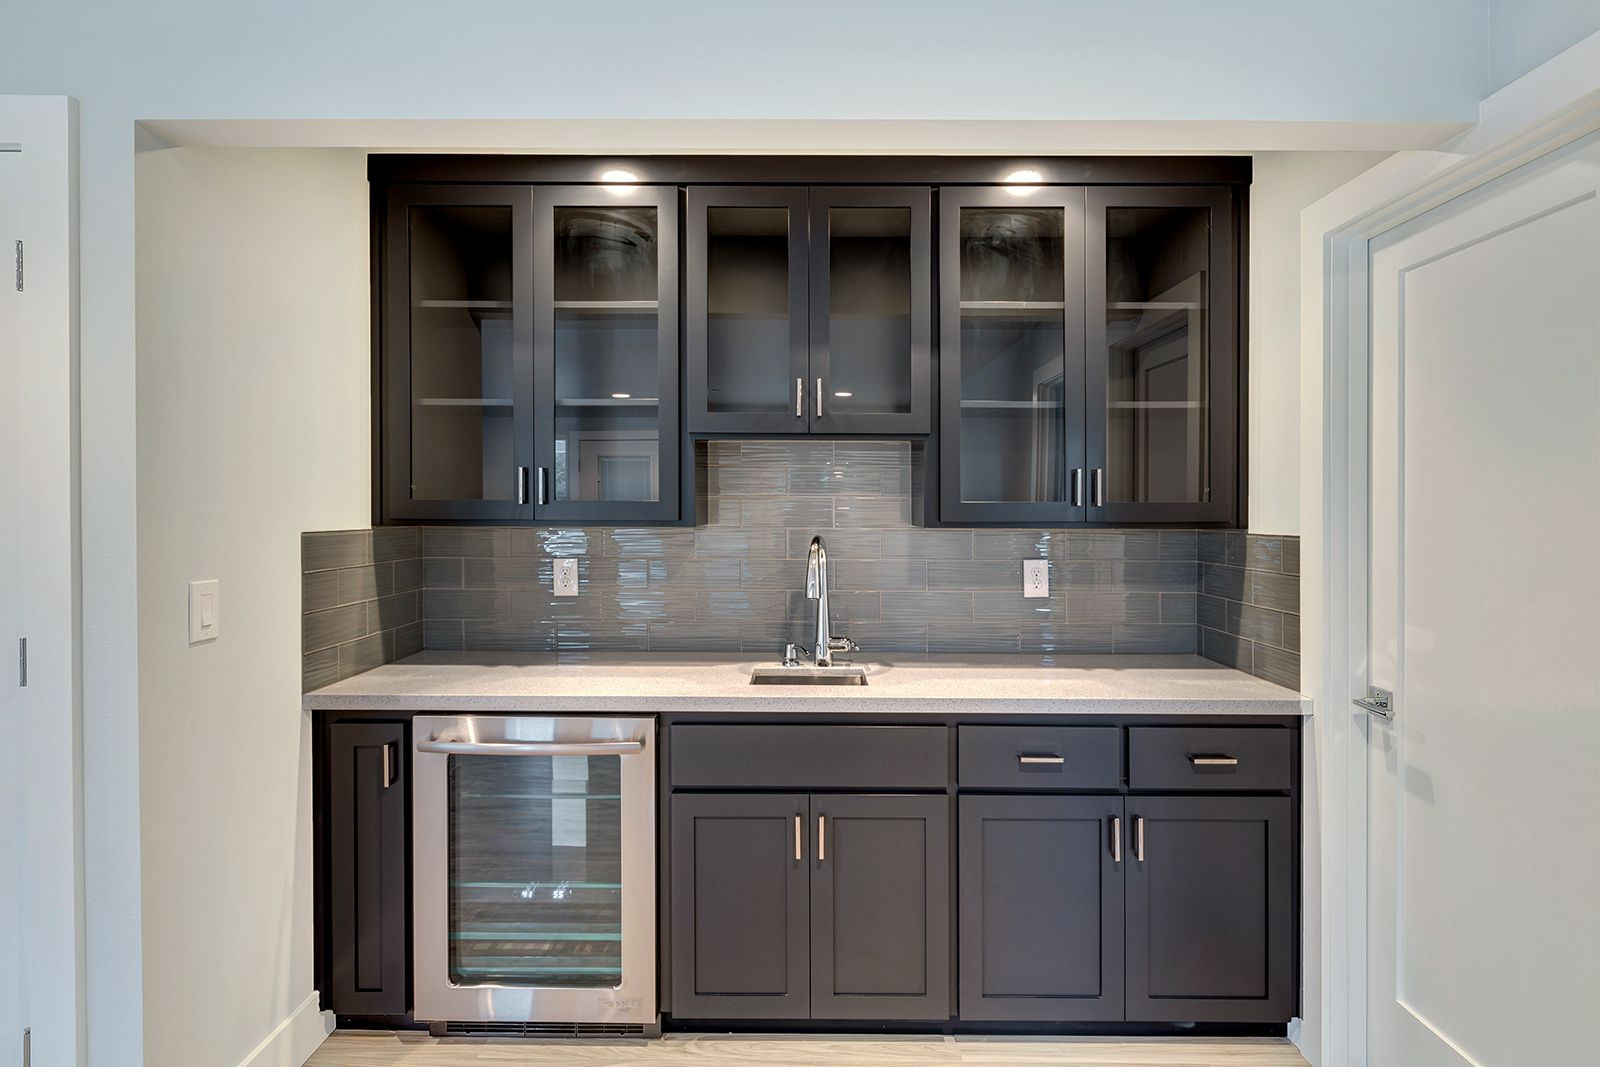 Kitchen Cabinet With Bar Counter
 Basement bar kitchen with a wine bar white quartz